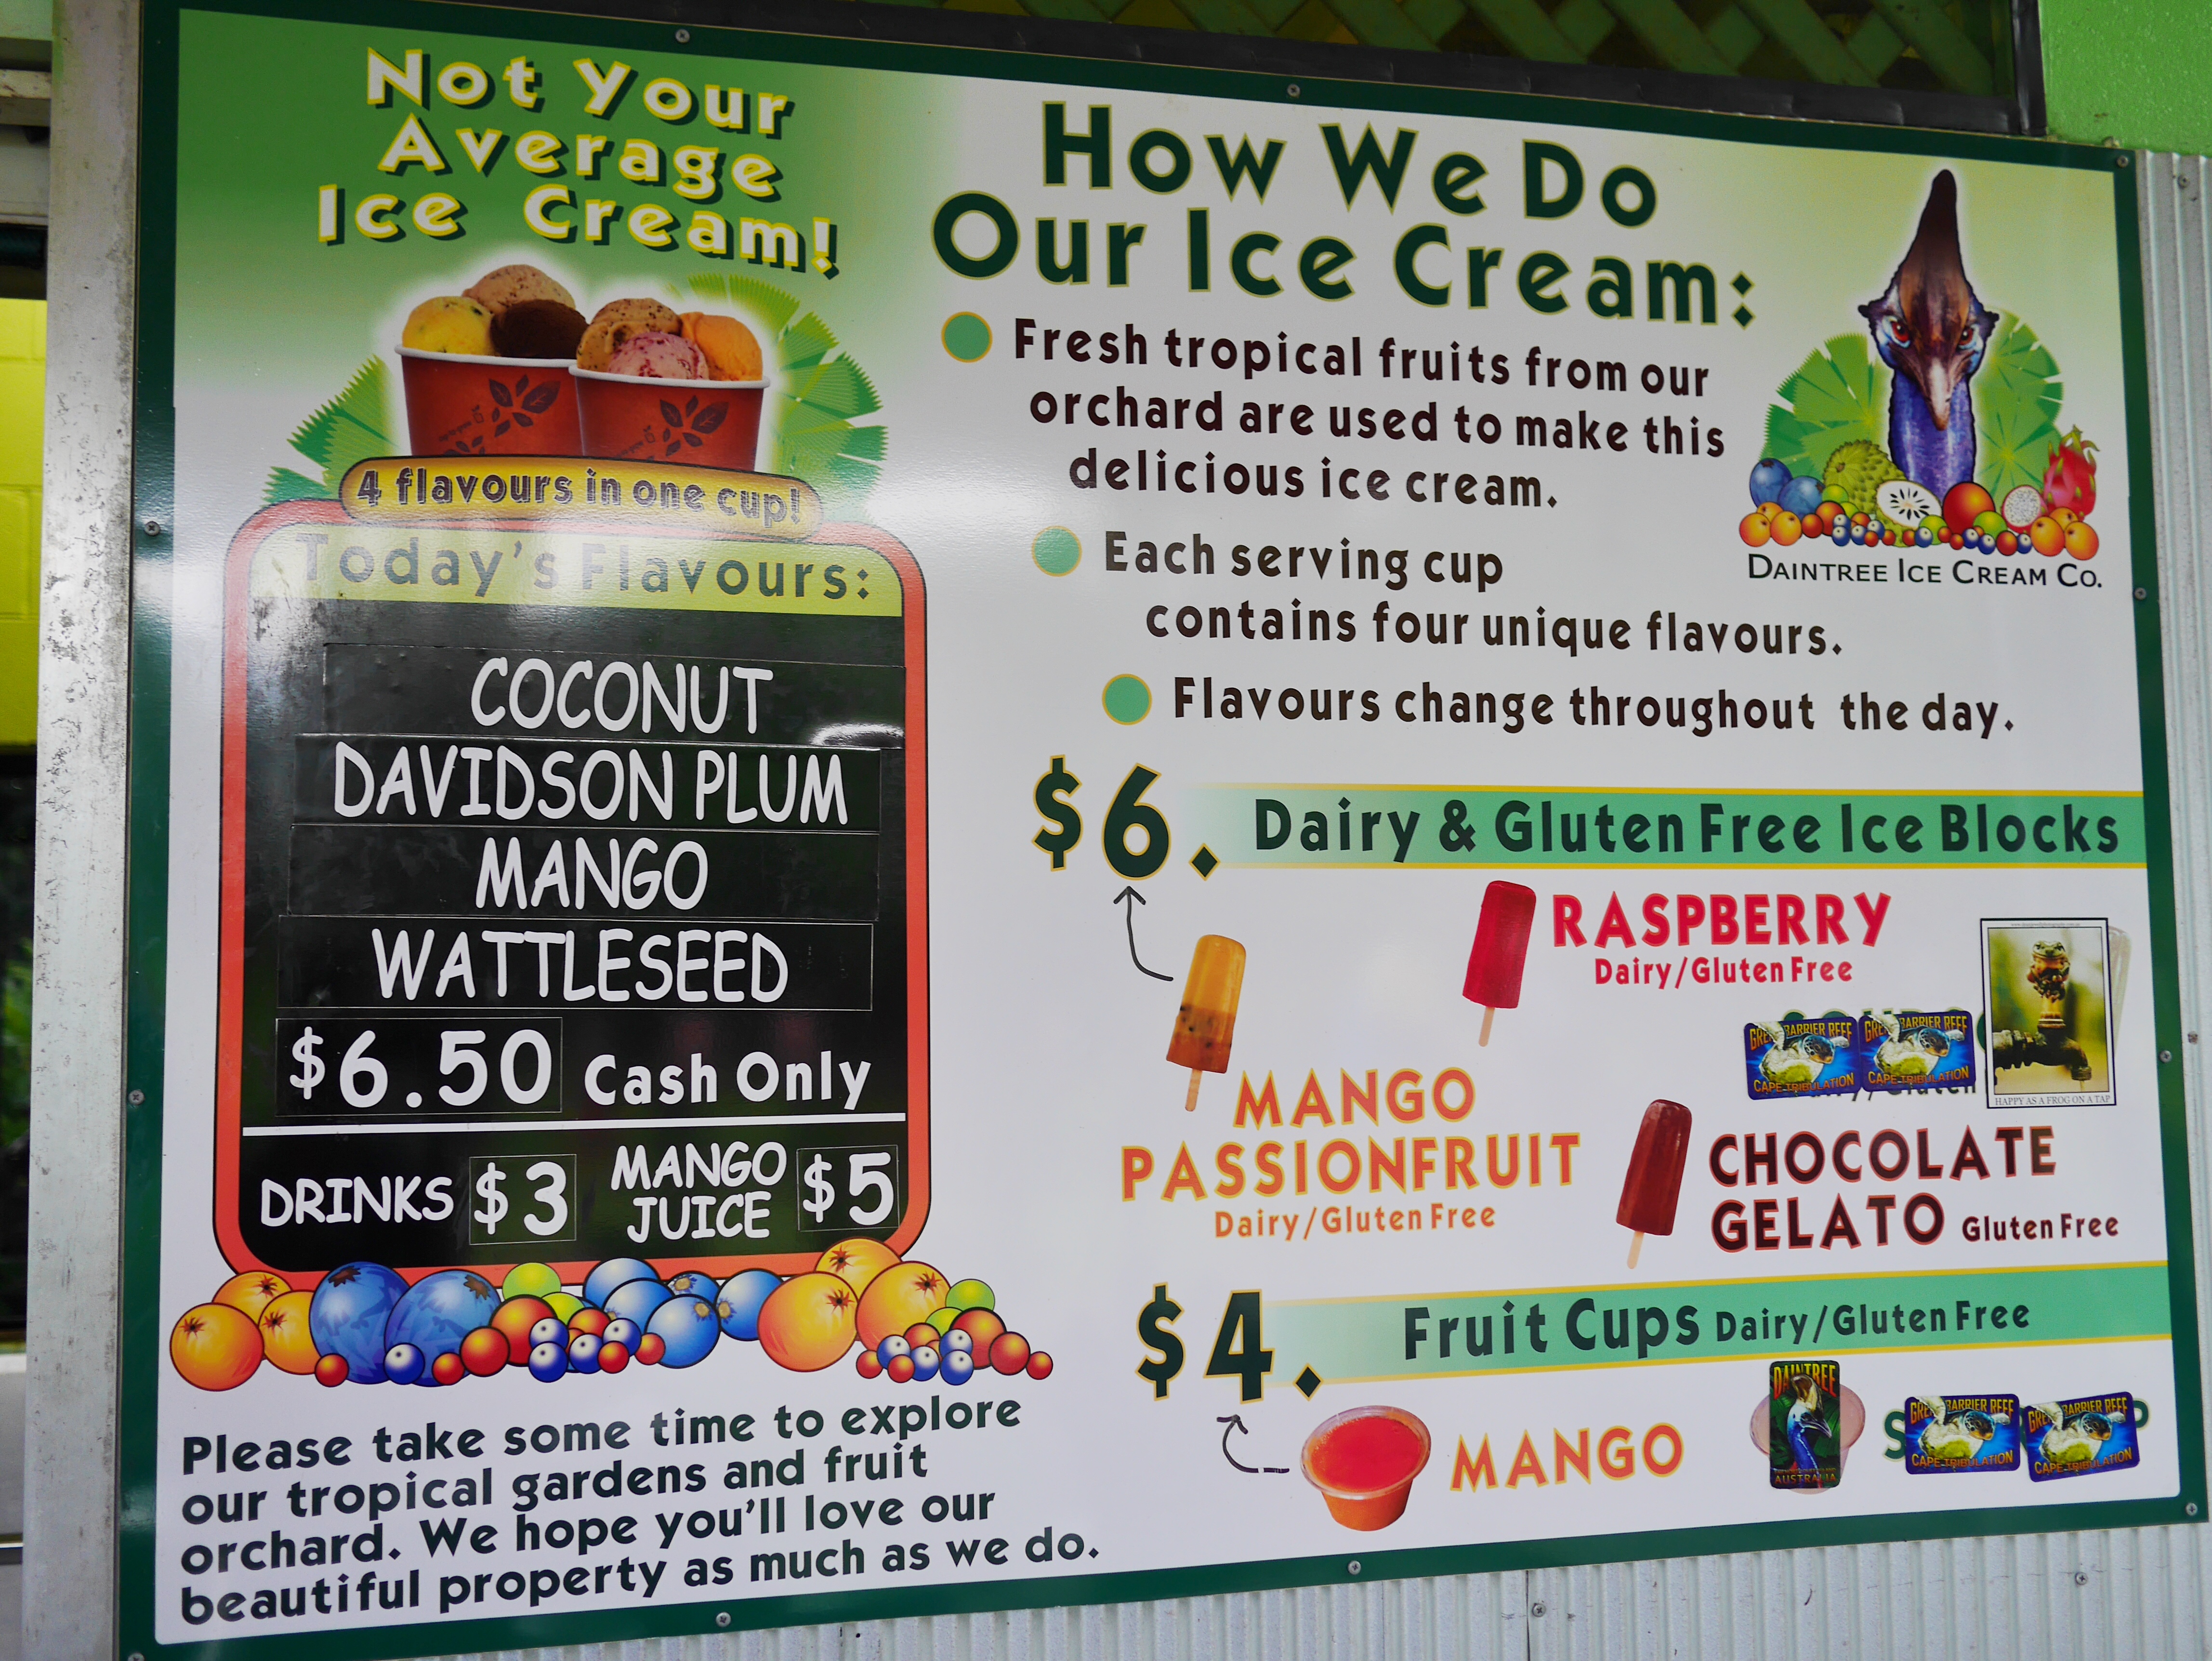 Daintree Ice Cream Factory